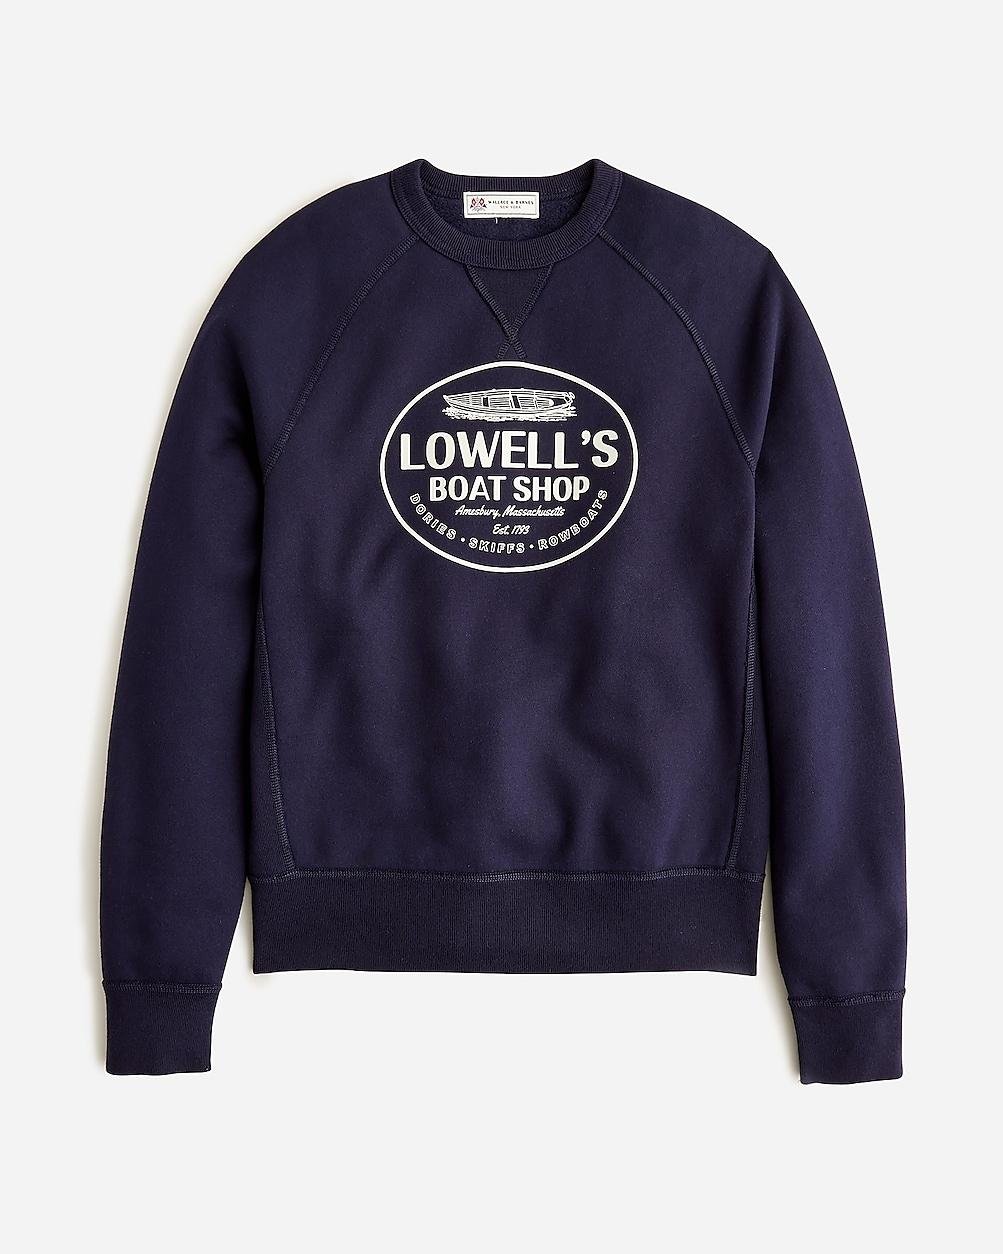 Lowell's Boat Shop X Wallace & Barnes graphic sweatshirt by J.CREW